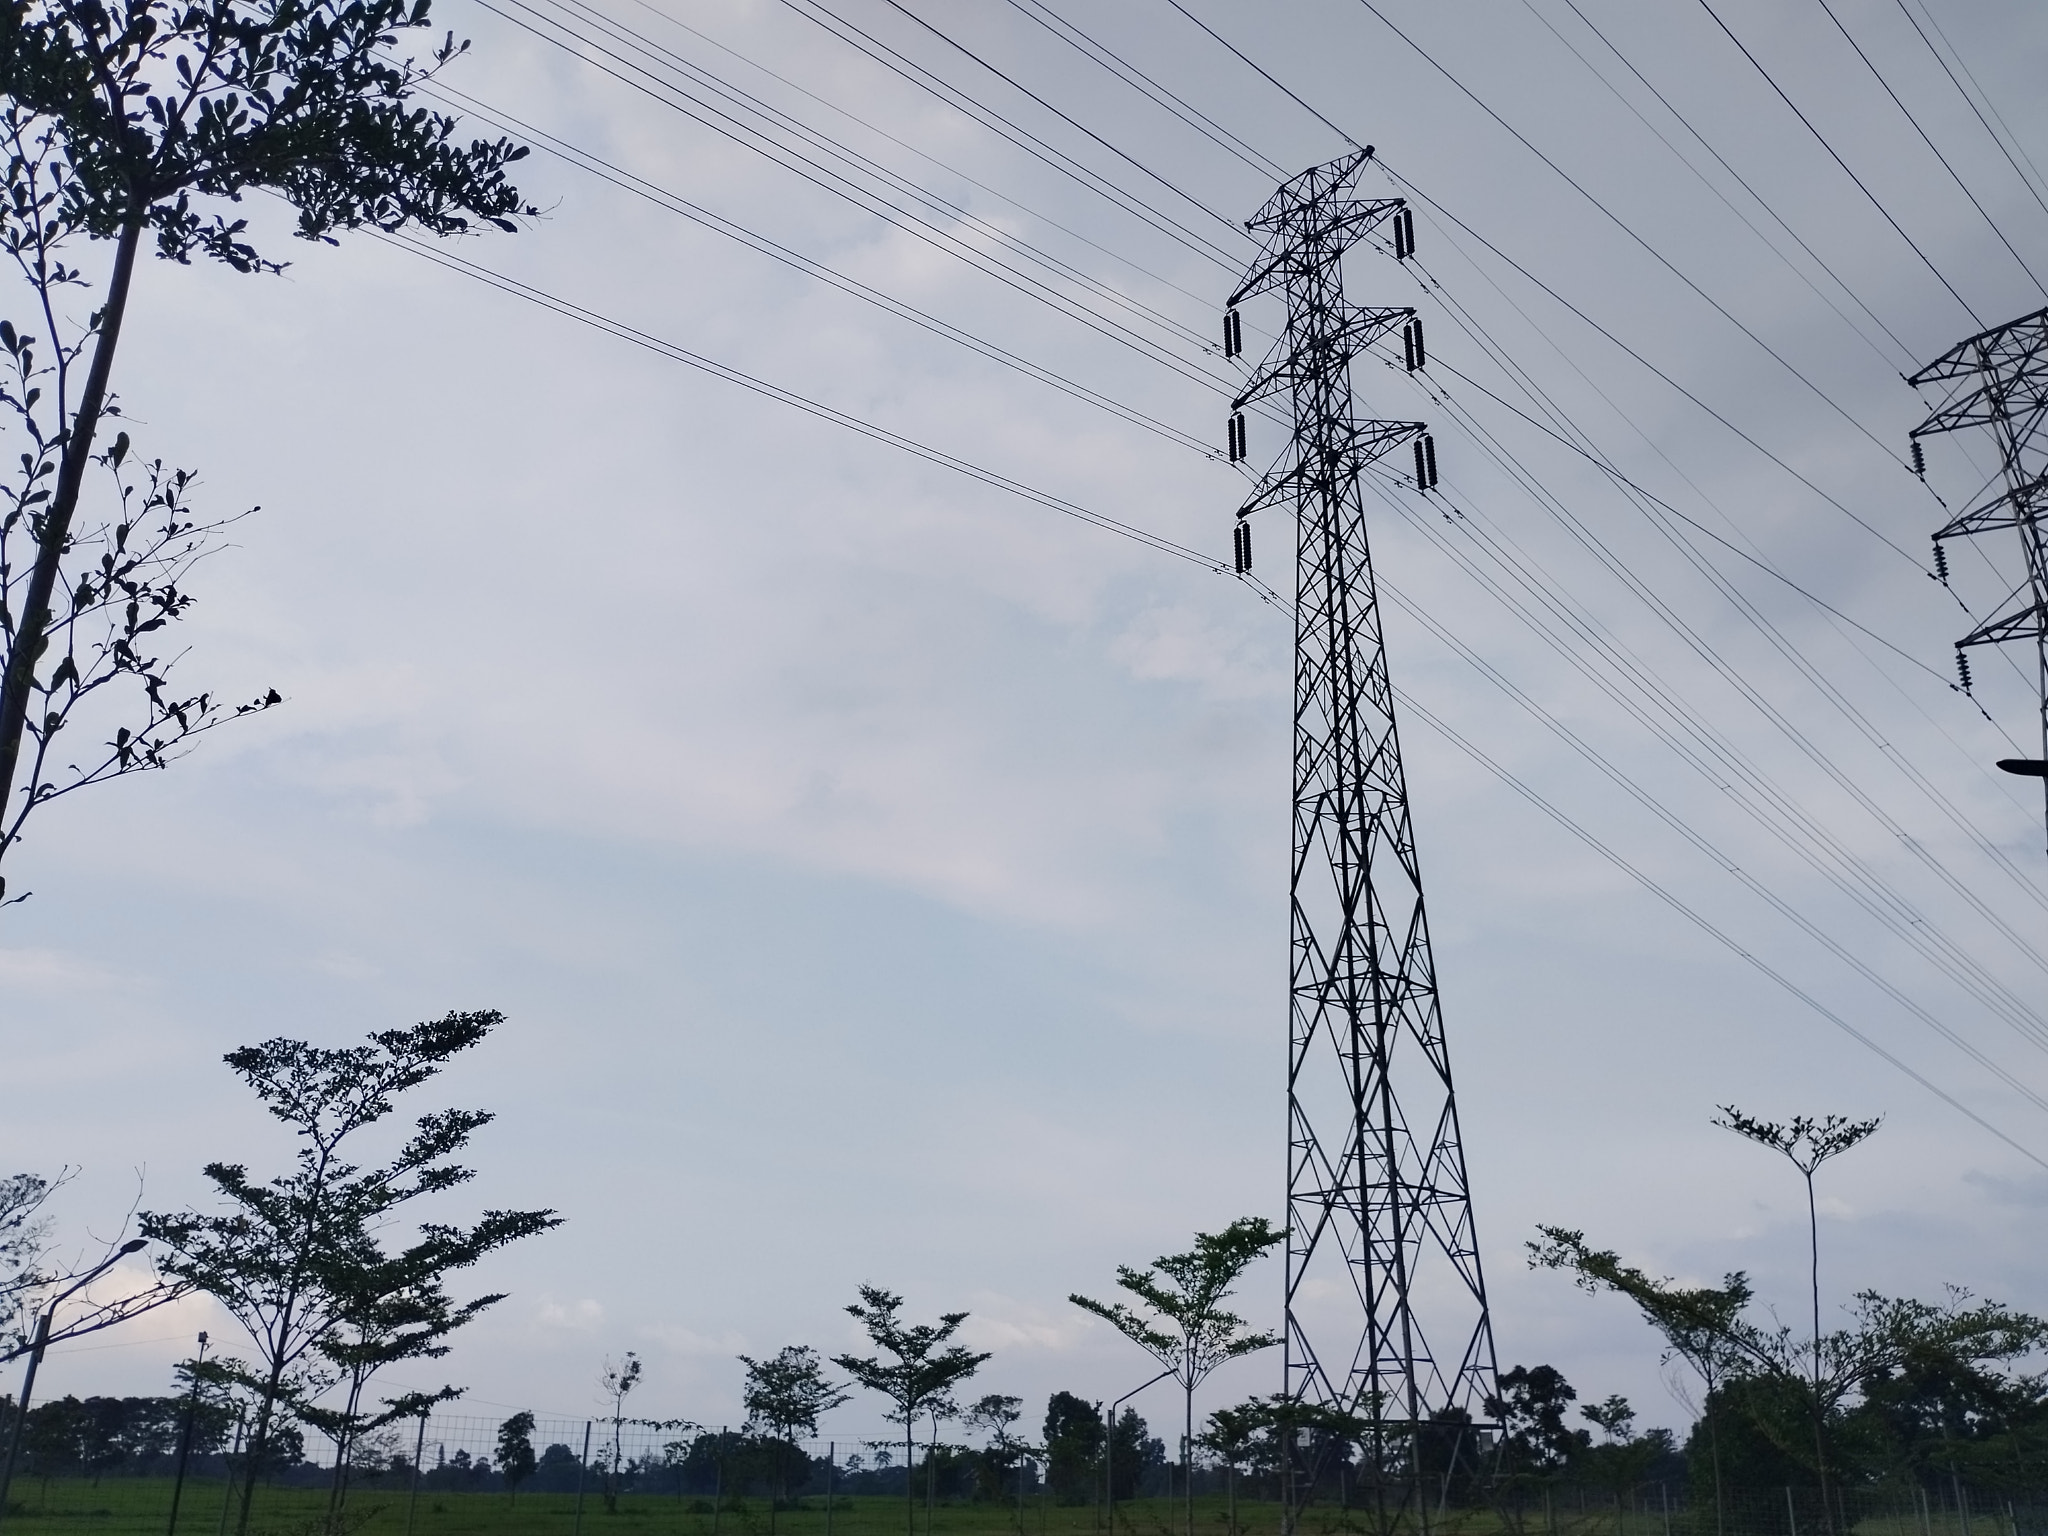 Skyward Reaching: Electric Poles Scraping the Sky